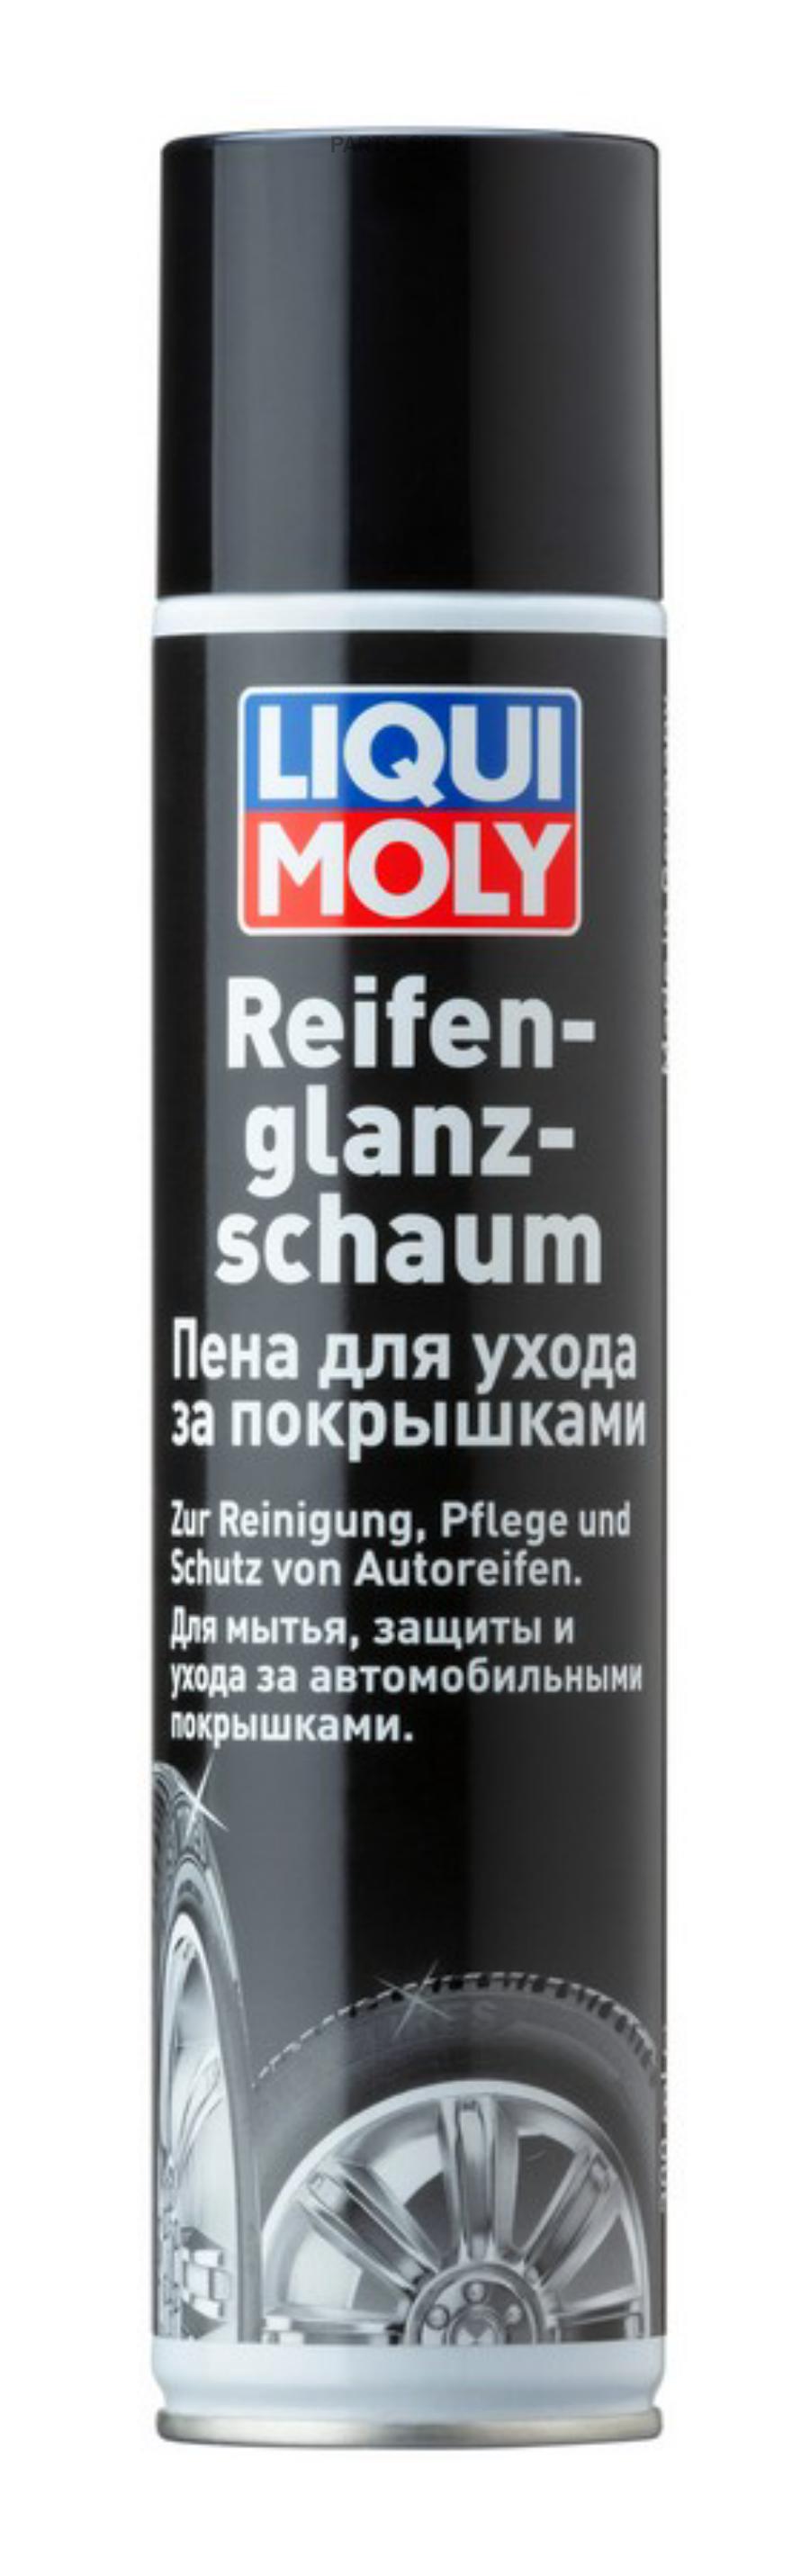 LiquiMoly Reifen-Glanz-Schaum 0.3L_пена для ухода за покрышками !